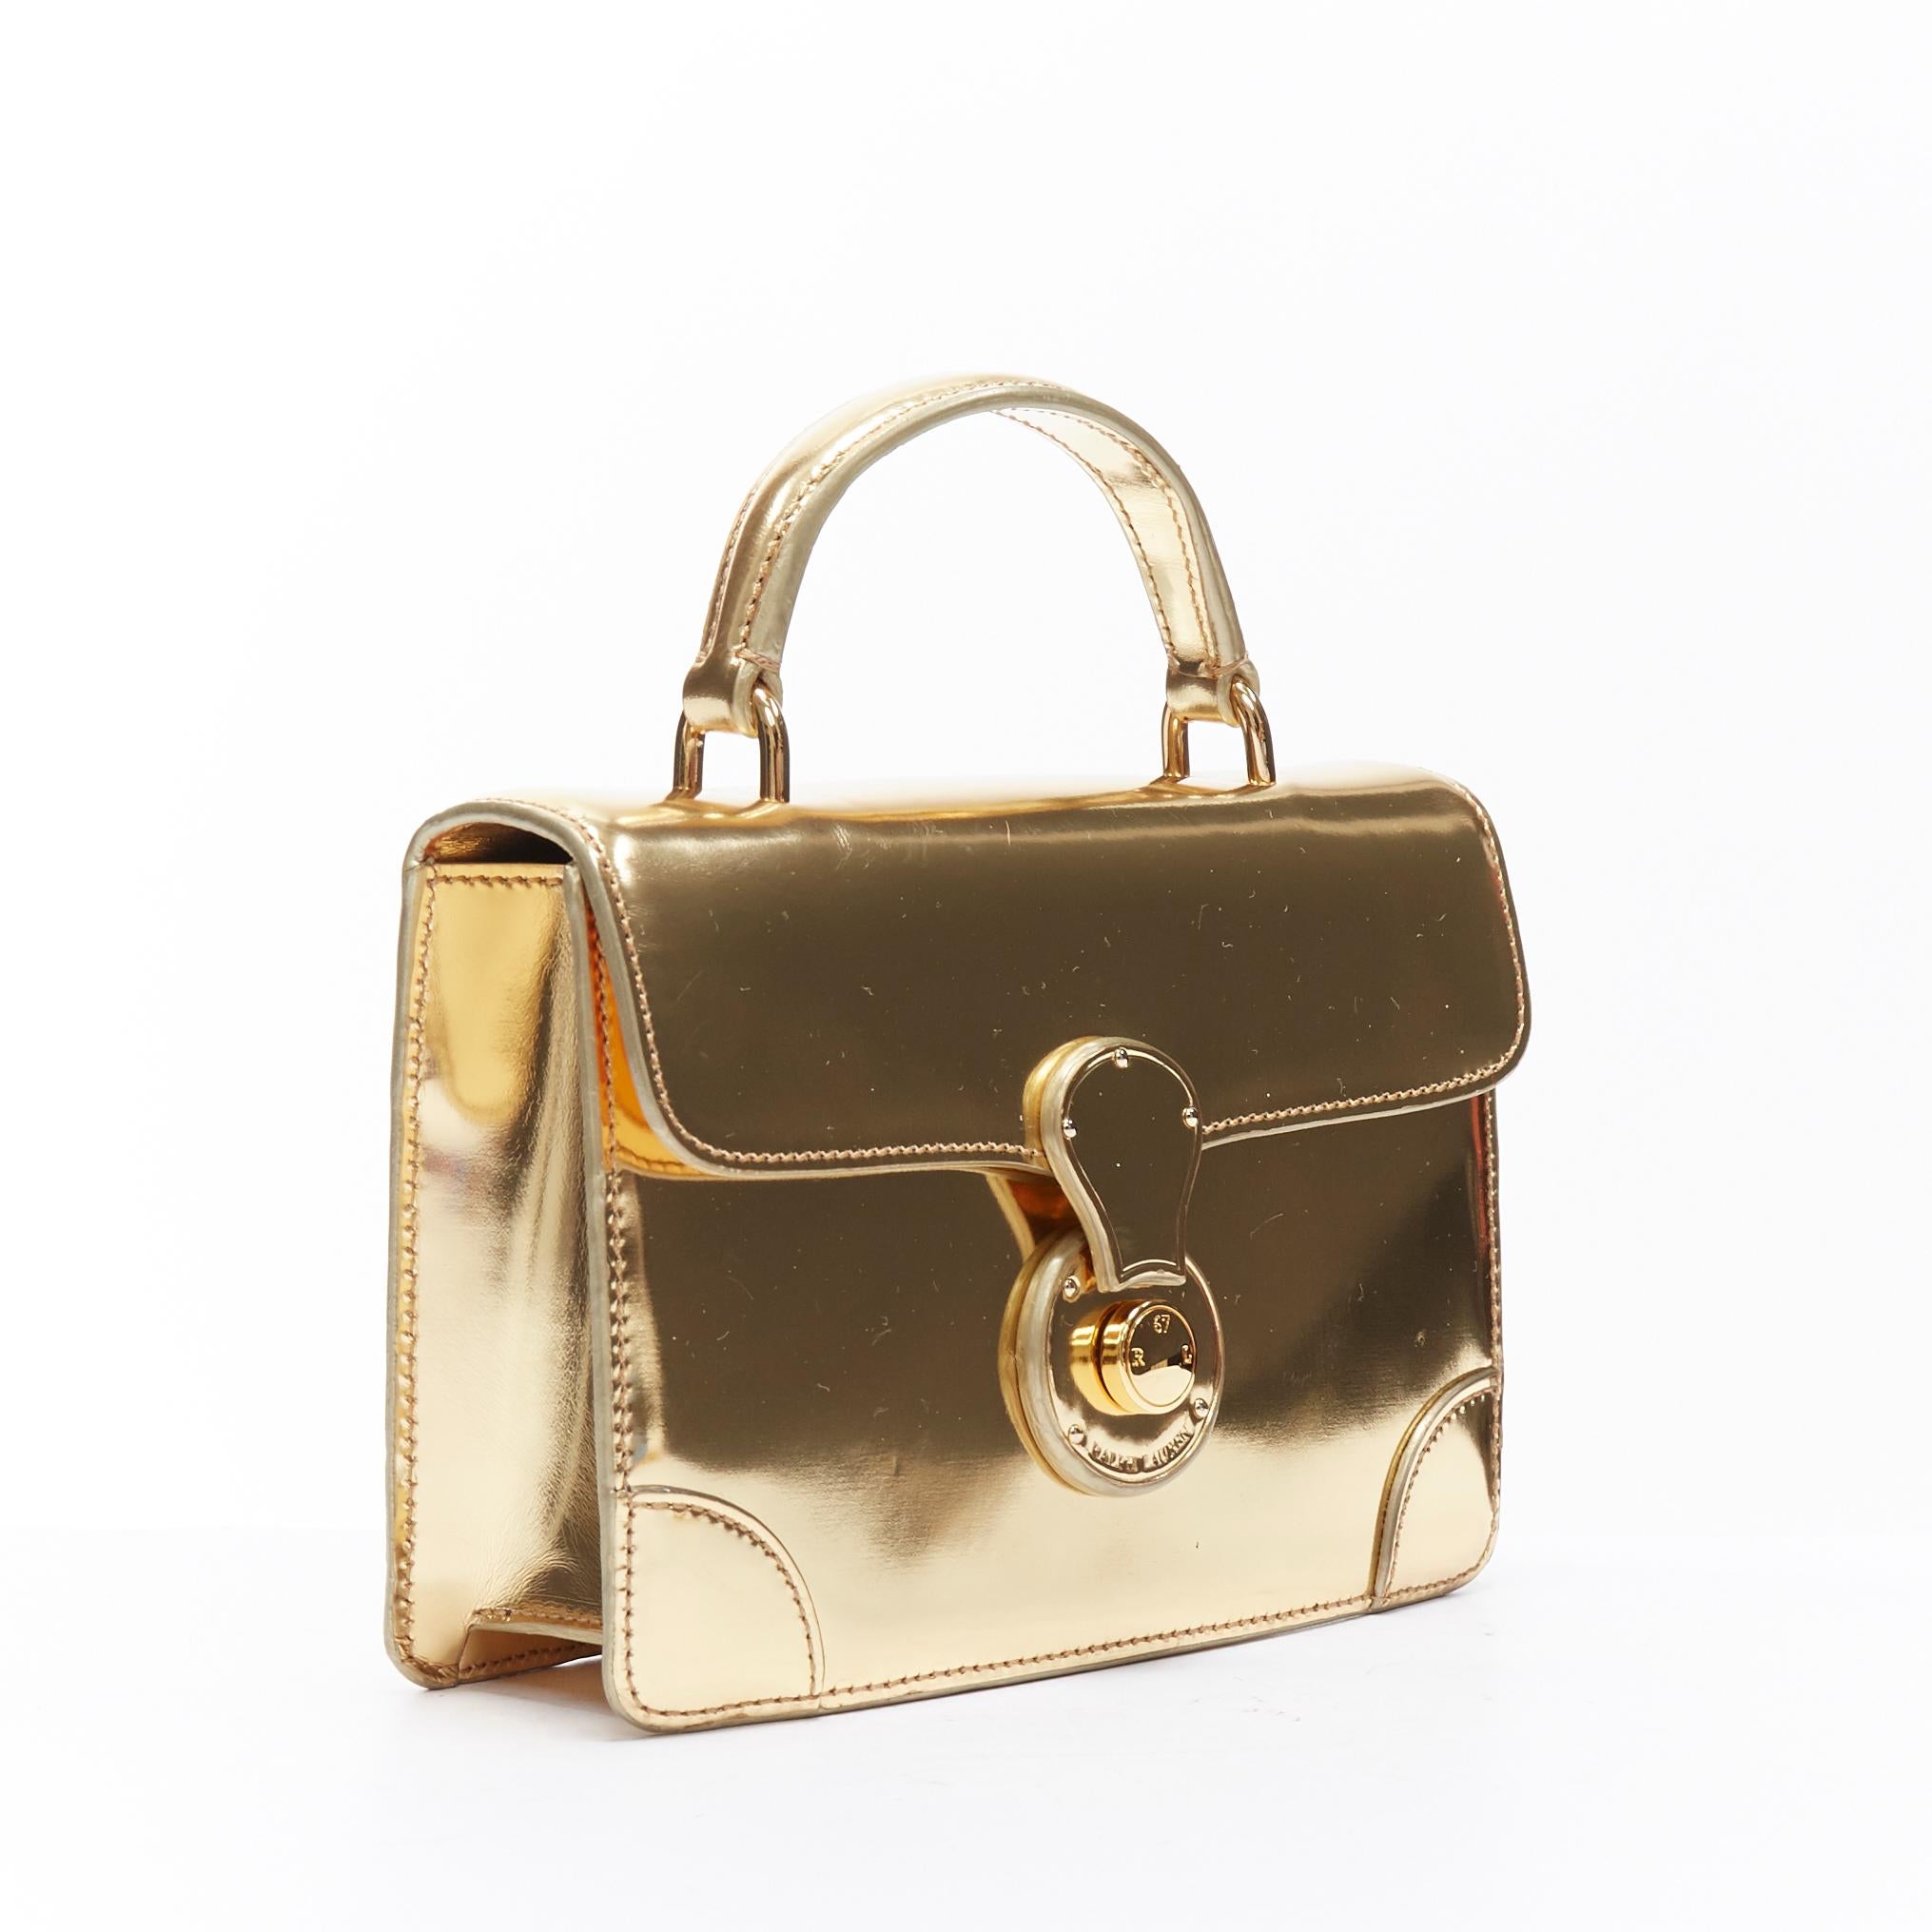 Gold RALPH LAUREN Ricky mirrored gold lock flap leather crossbody small satchel bag